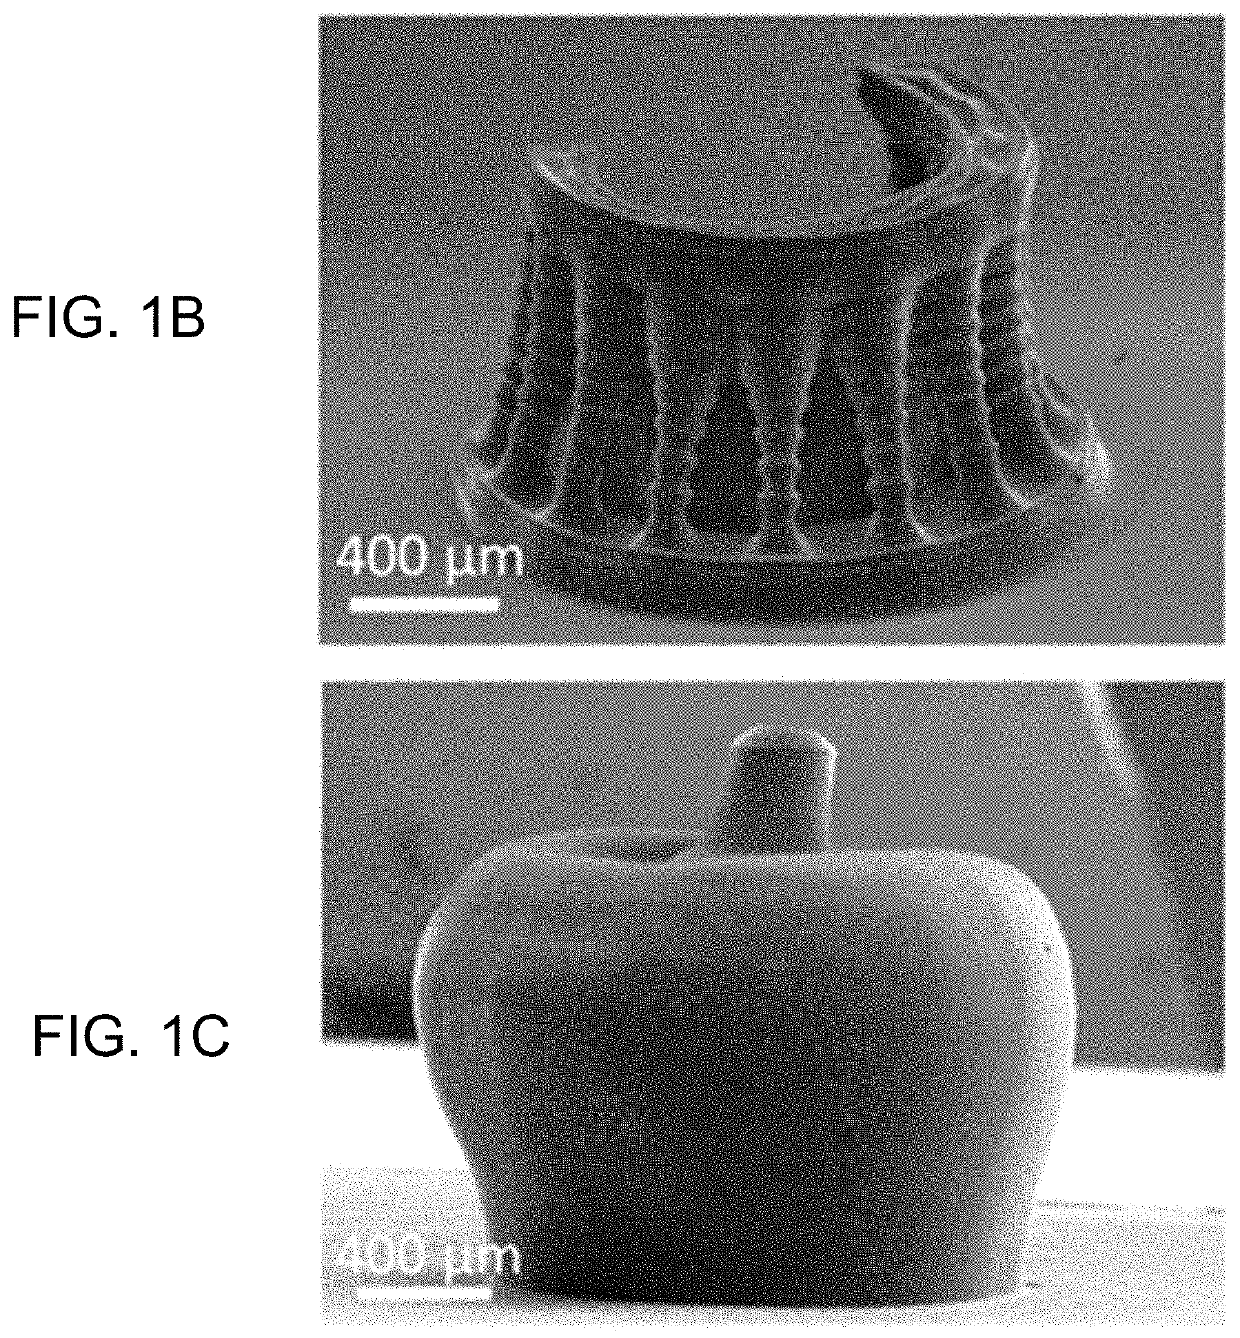 High-fidelity 3D printing using flashing photopolymerization